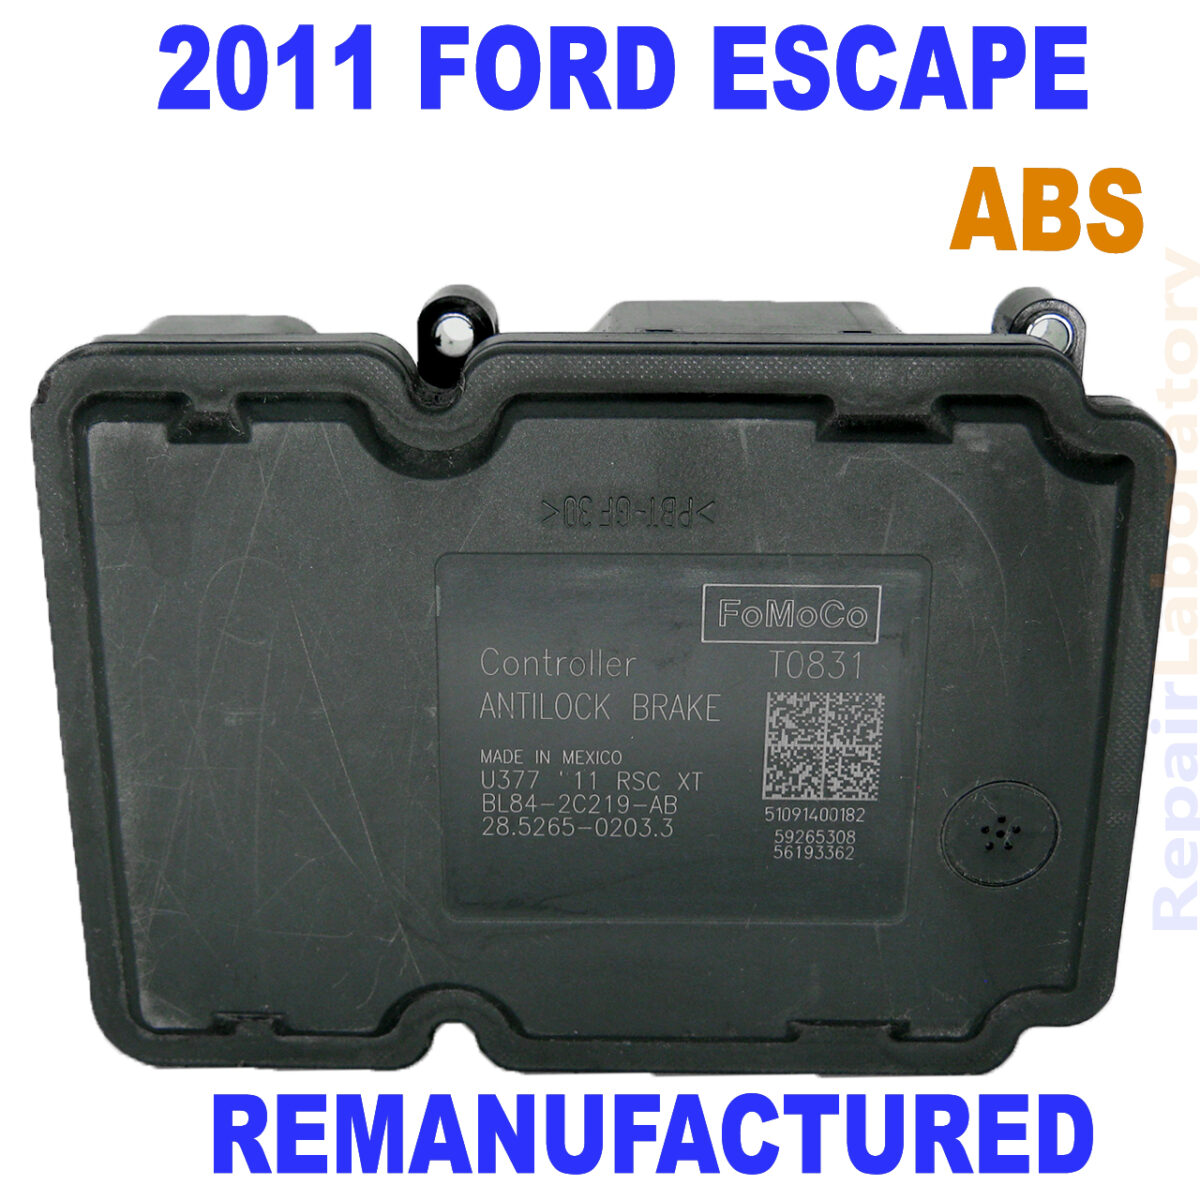 2011_ford_escape_abs_control_module_BL84-2C219-AB